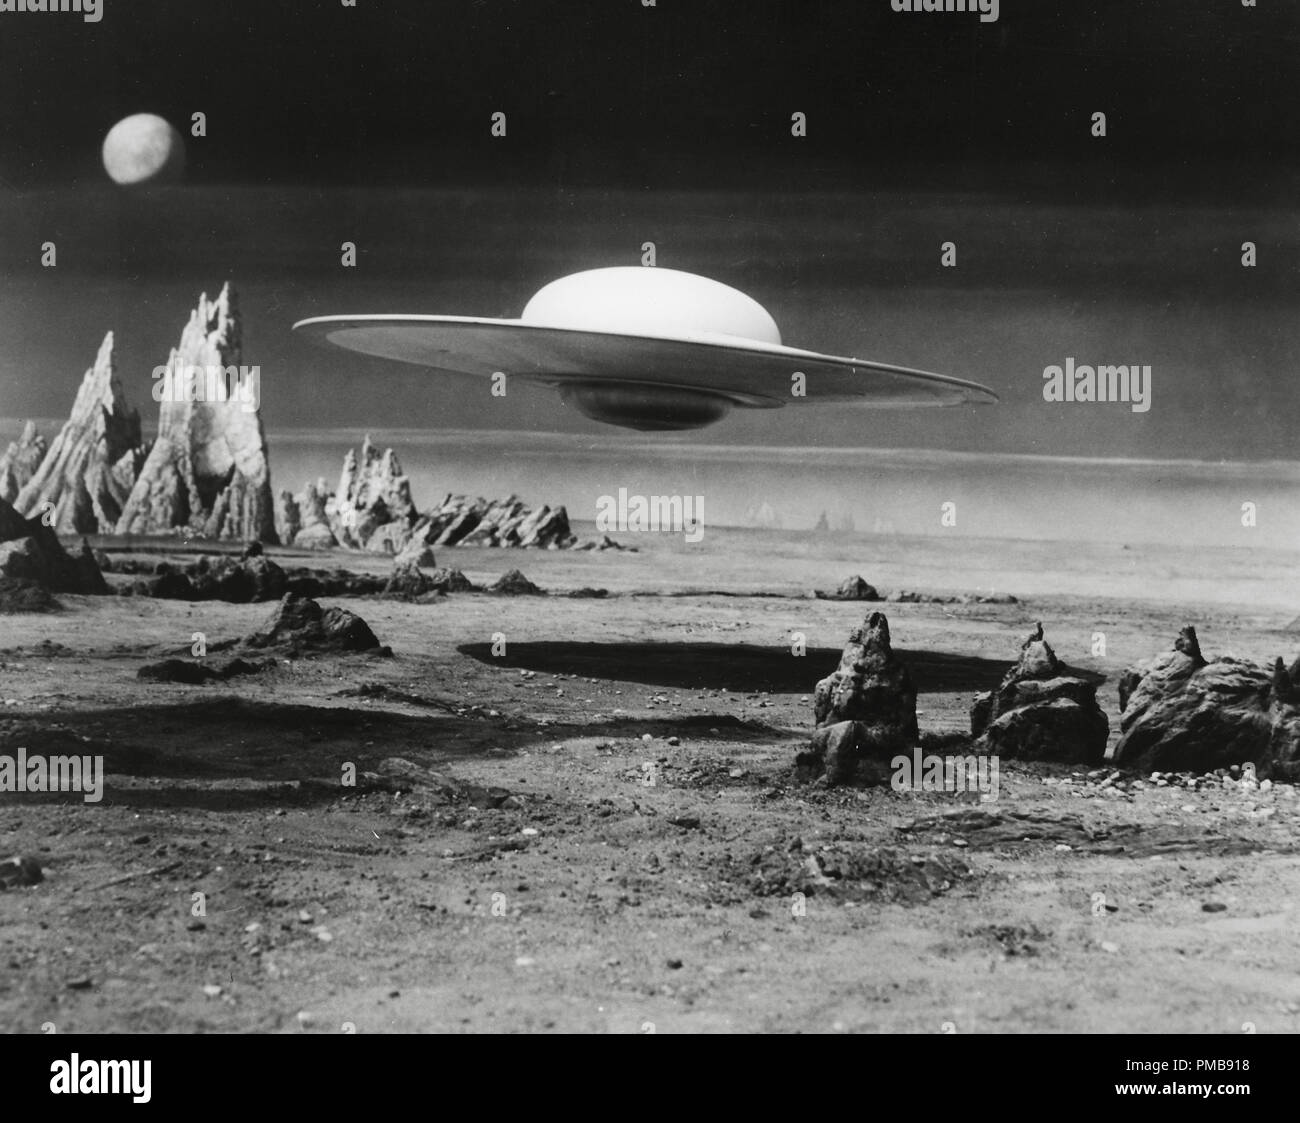 Forbidden Planet (1956) Classic Film Review 160 